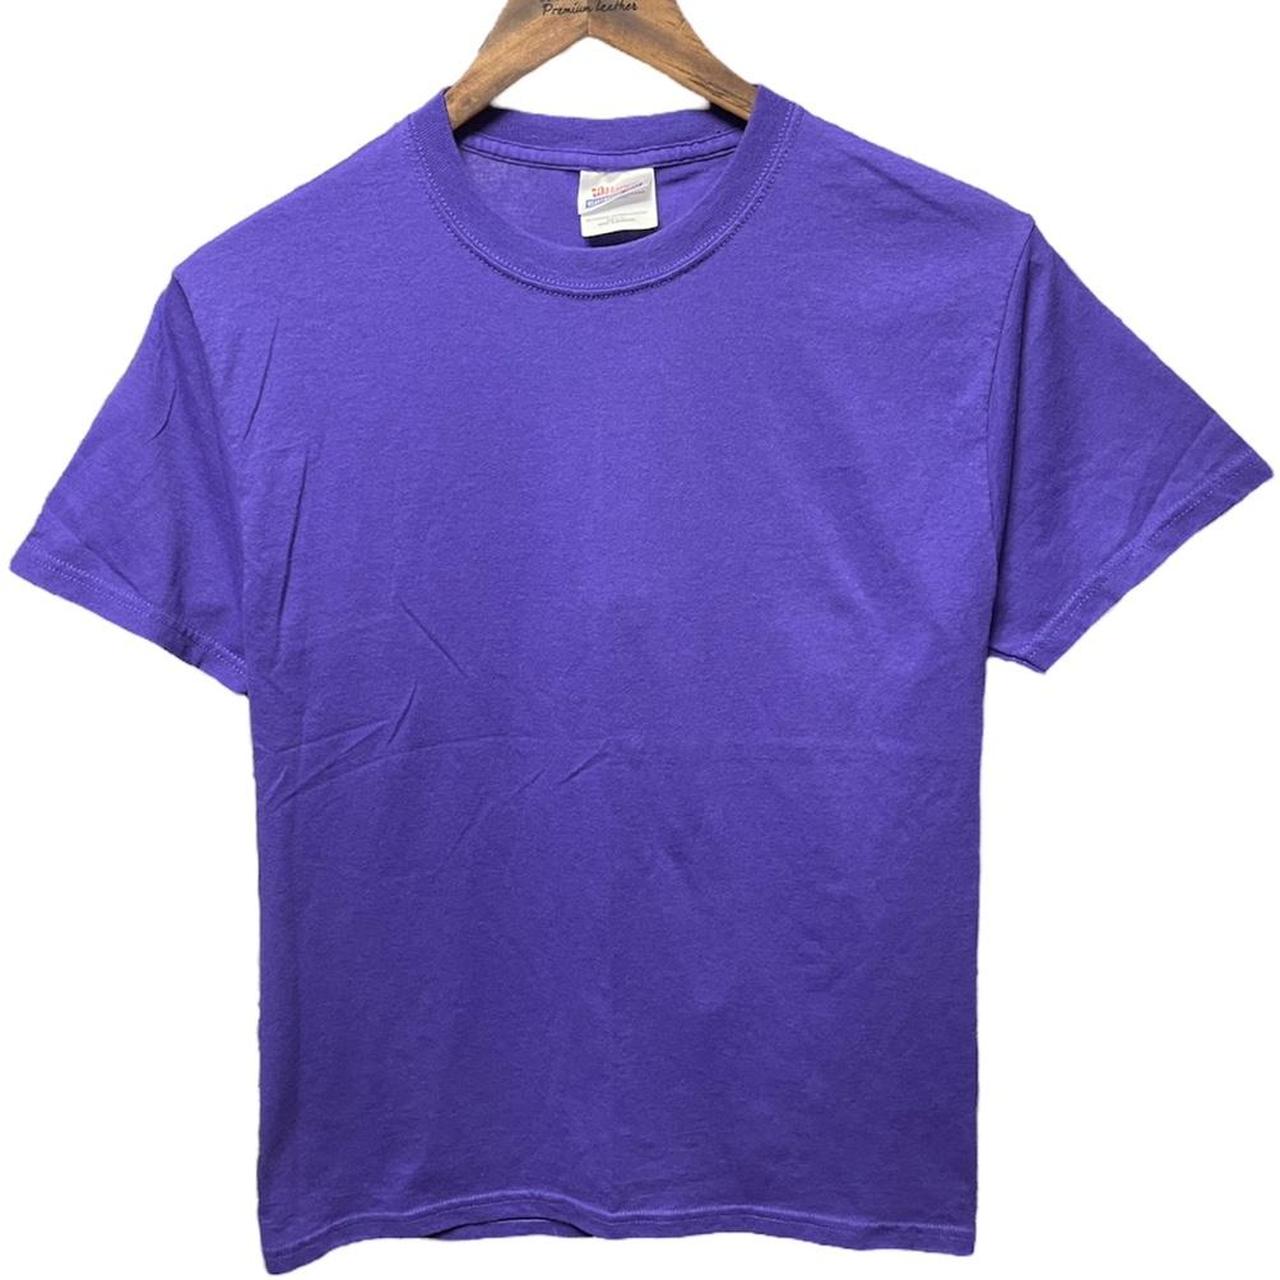 Description: blank purple Hanes short sleeve